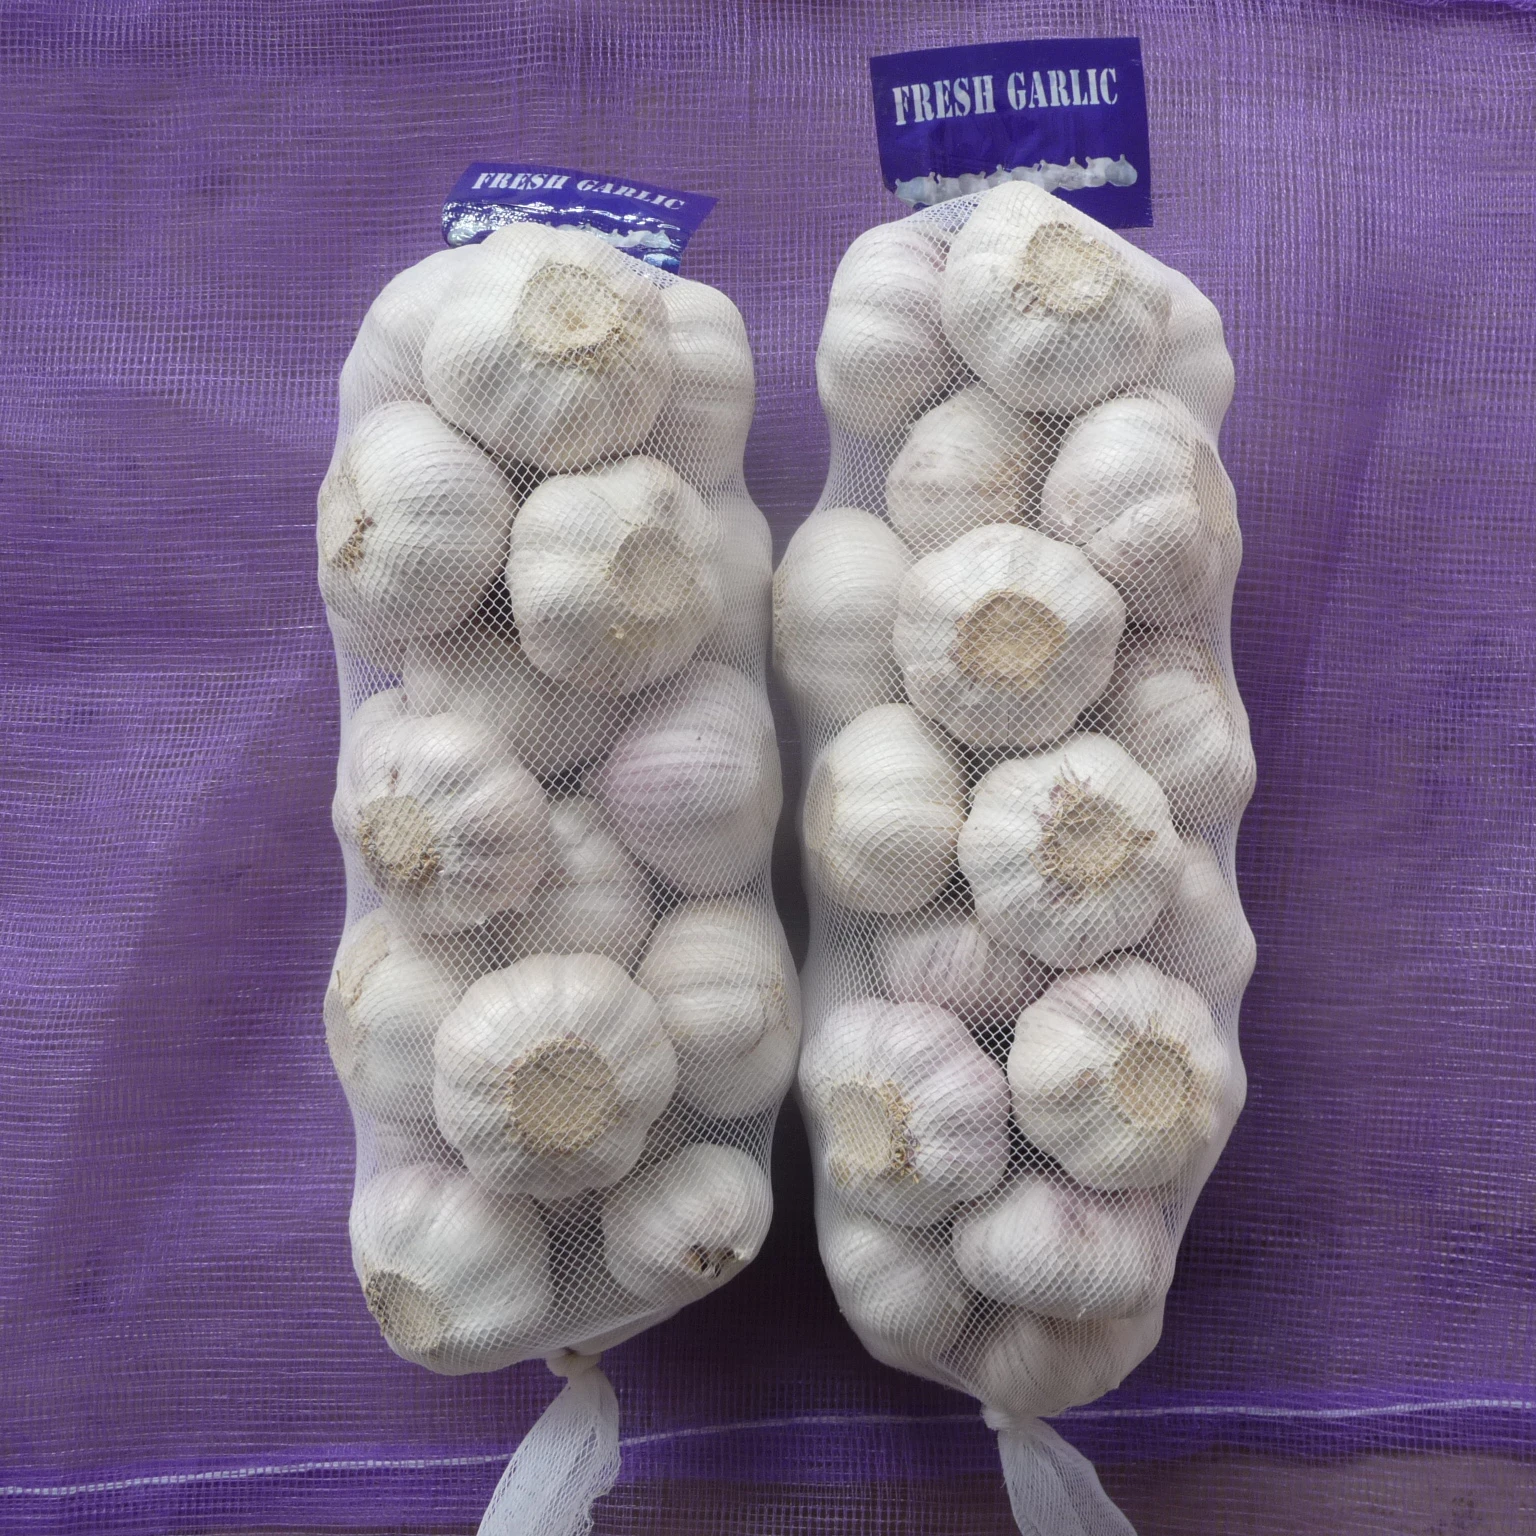 fresh ginger and garlic fresh in bulk from Shandong Sinofarm supplier